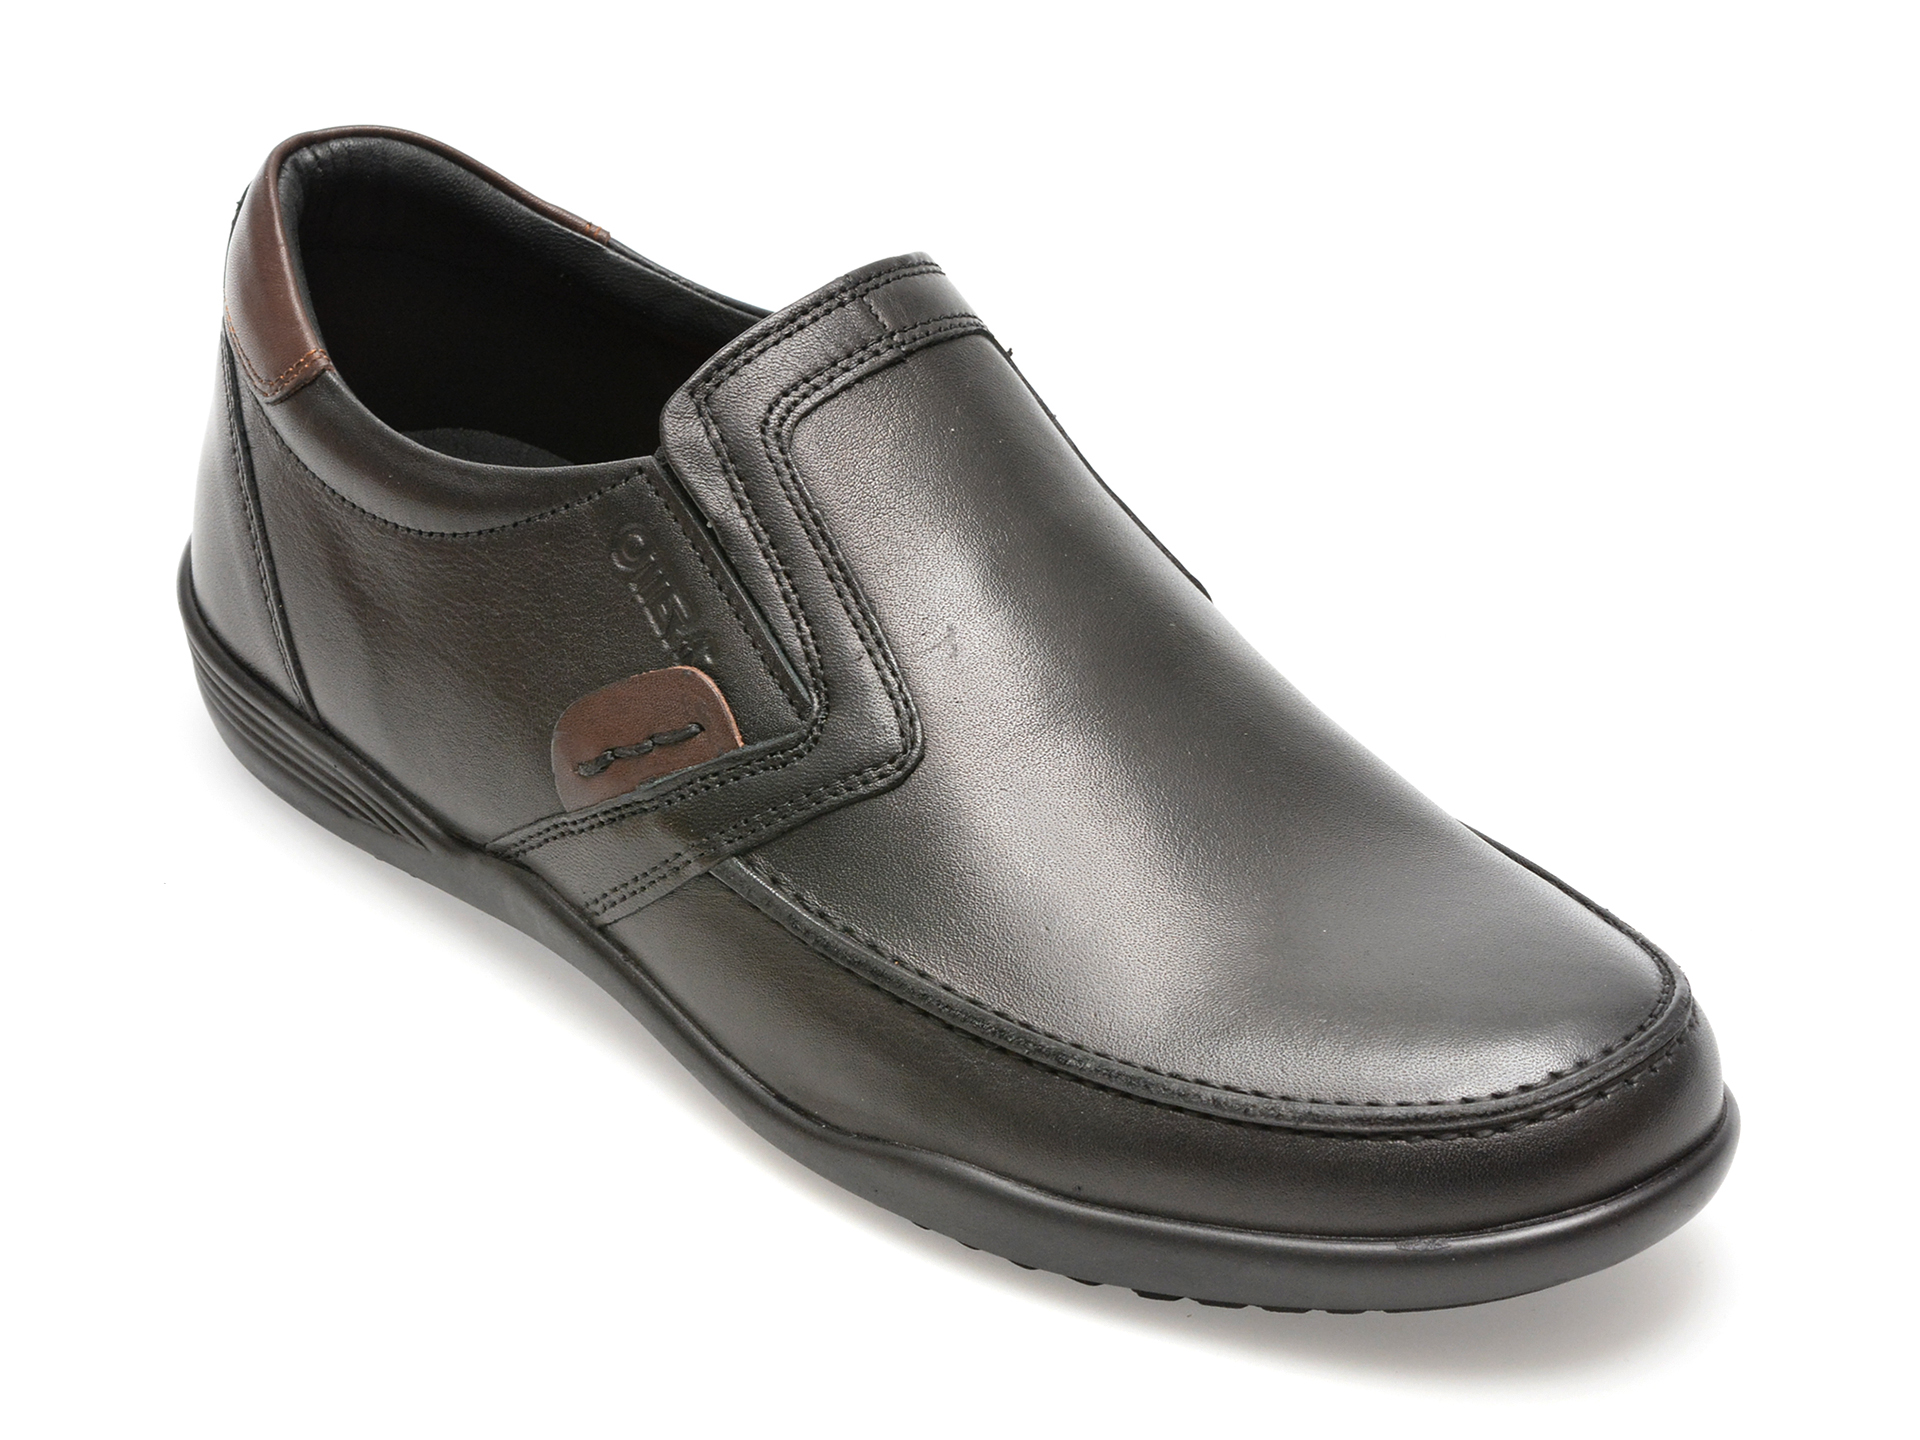 Pantofi casual OTTER negri, 220, din piele naturala